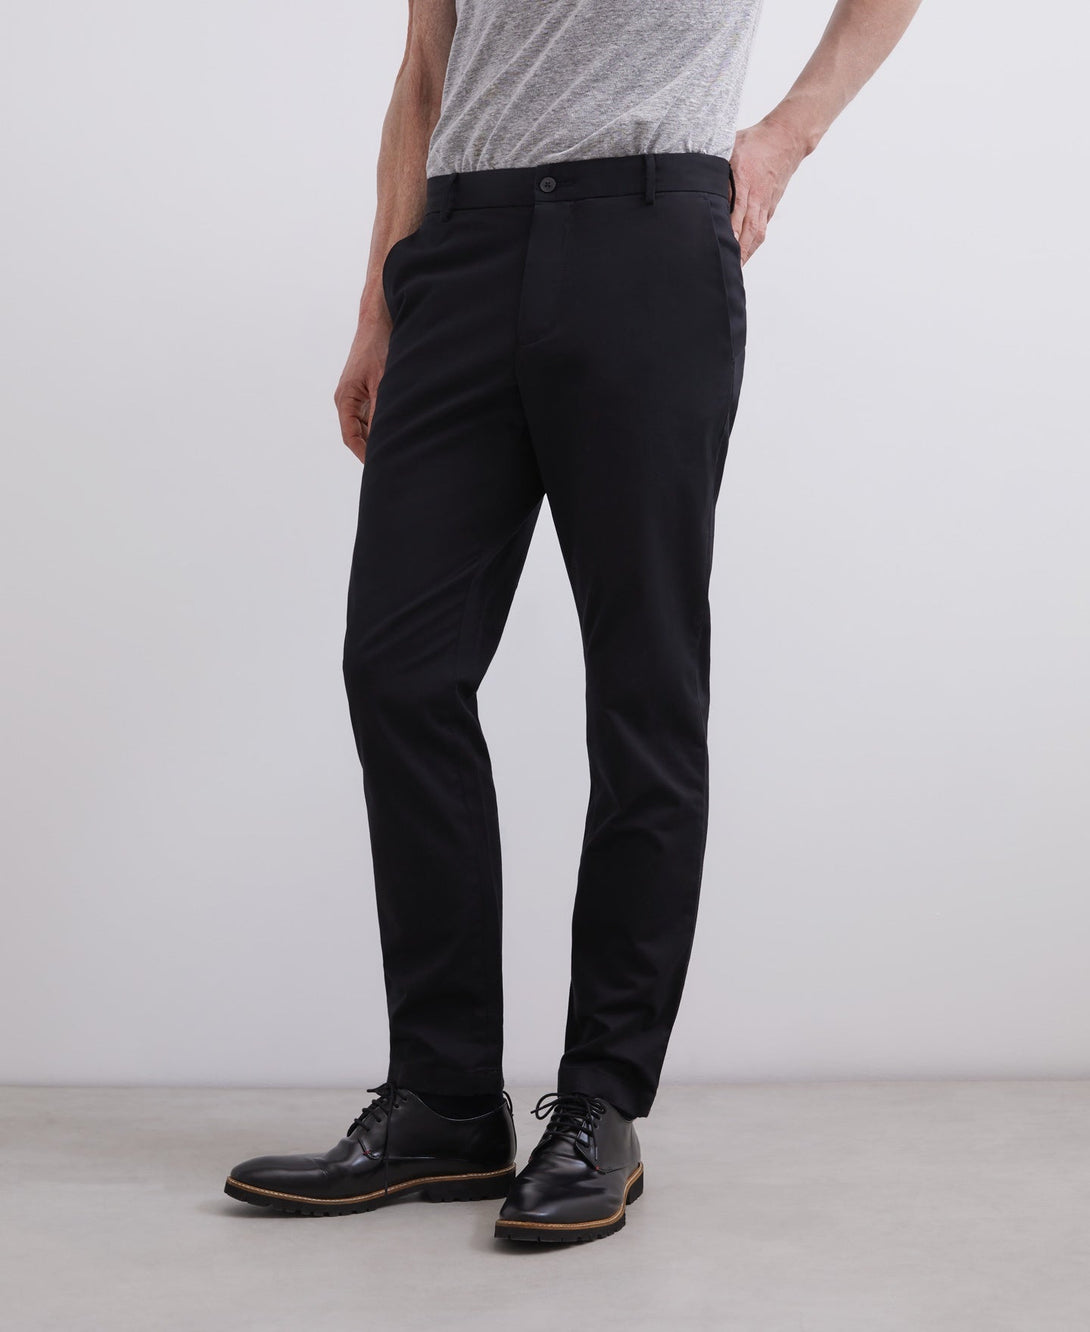 Men Trousers | Black Organic Cotton Chino Trousers by Spanish designer Adolfo Dominguez